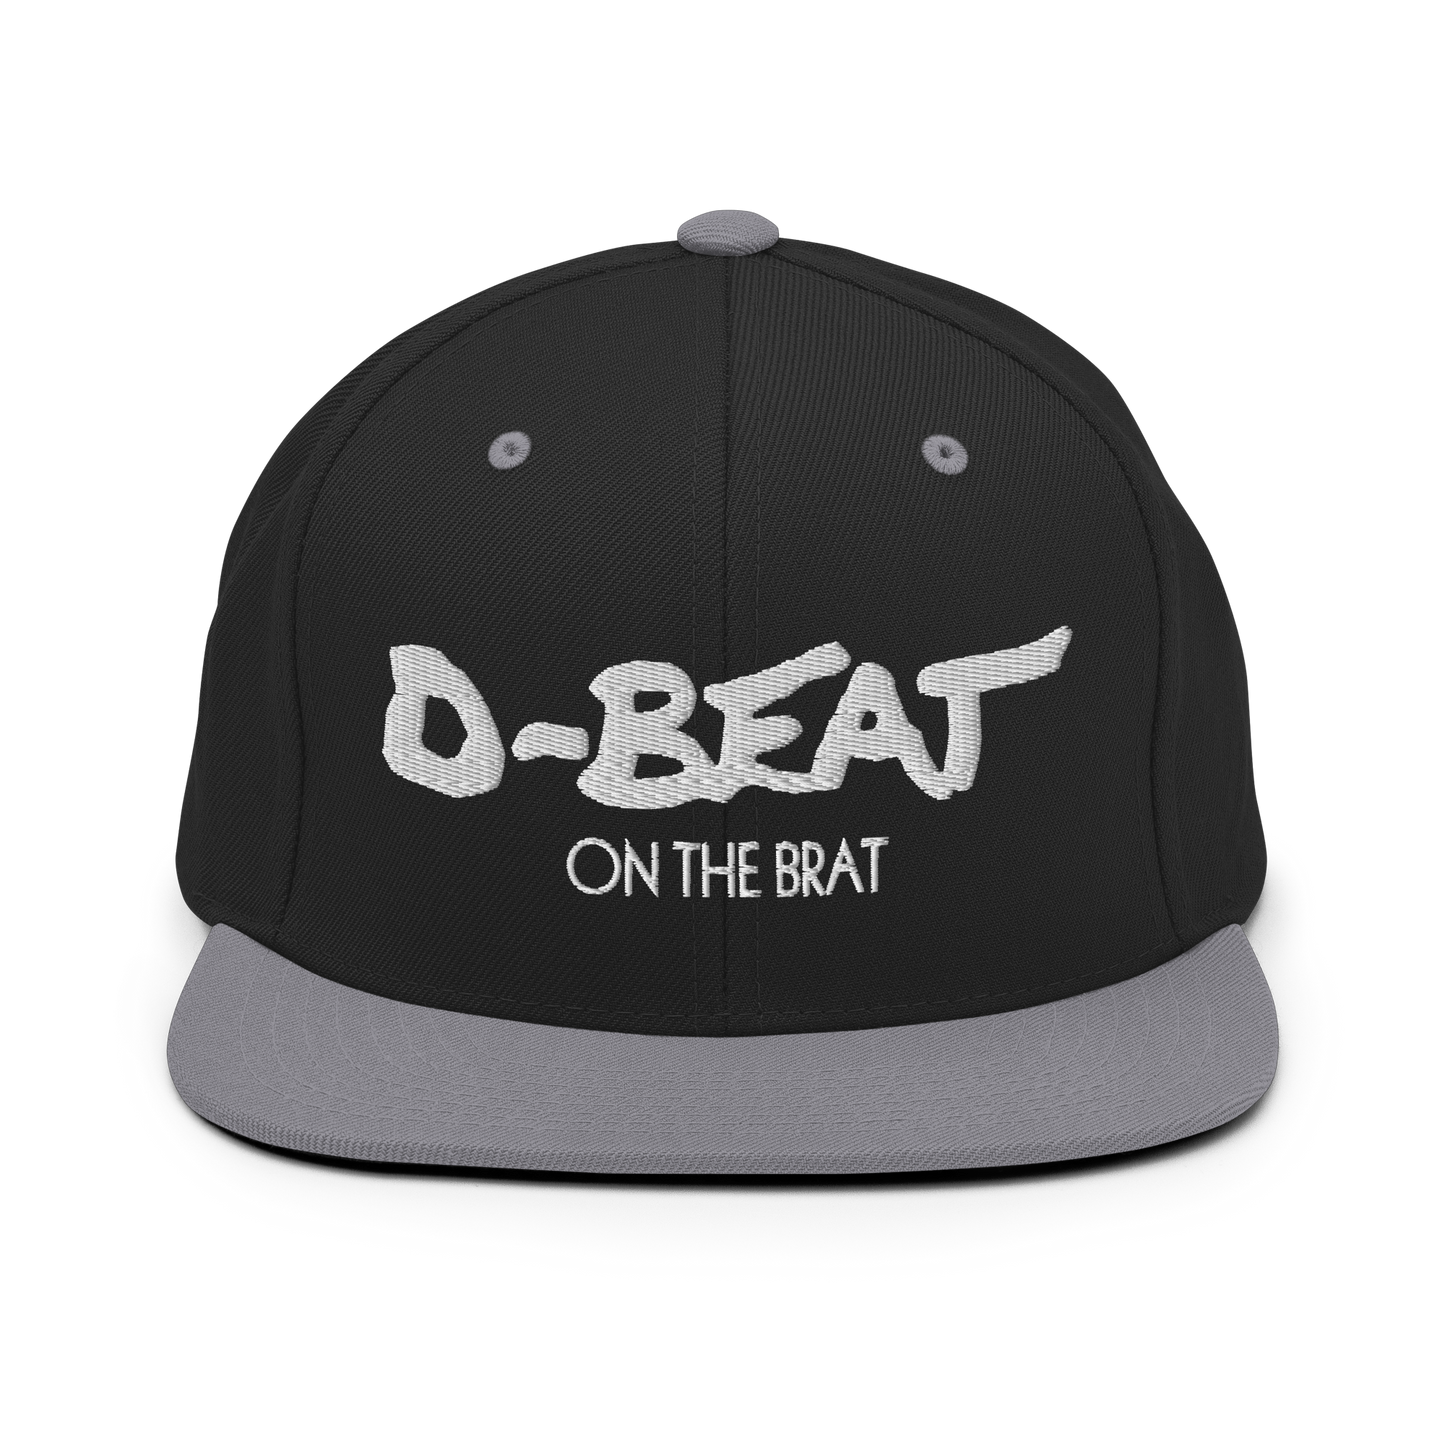 Stealworks "D-Beat on the Brat" Snapback Hat